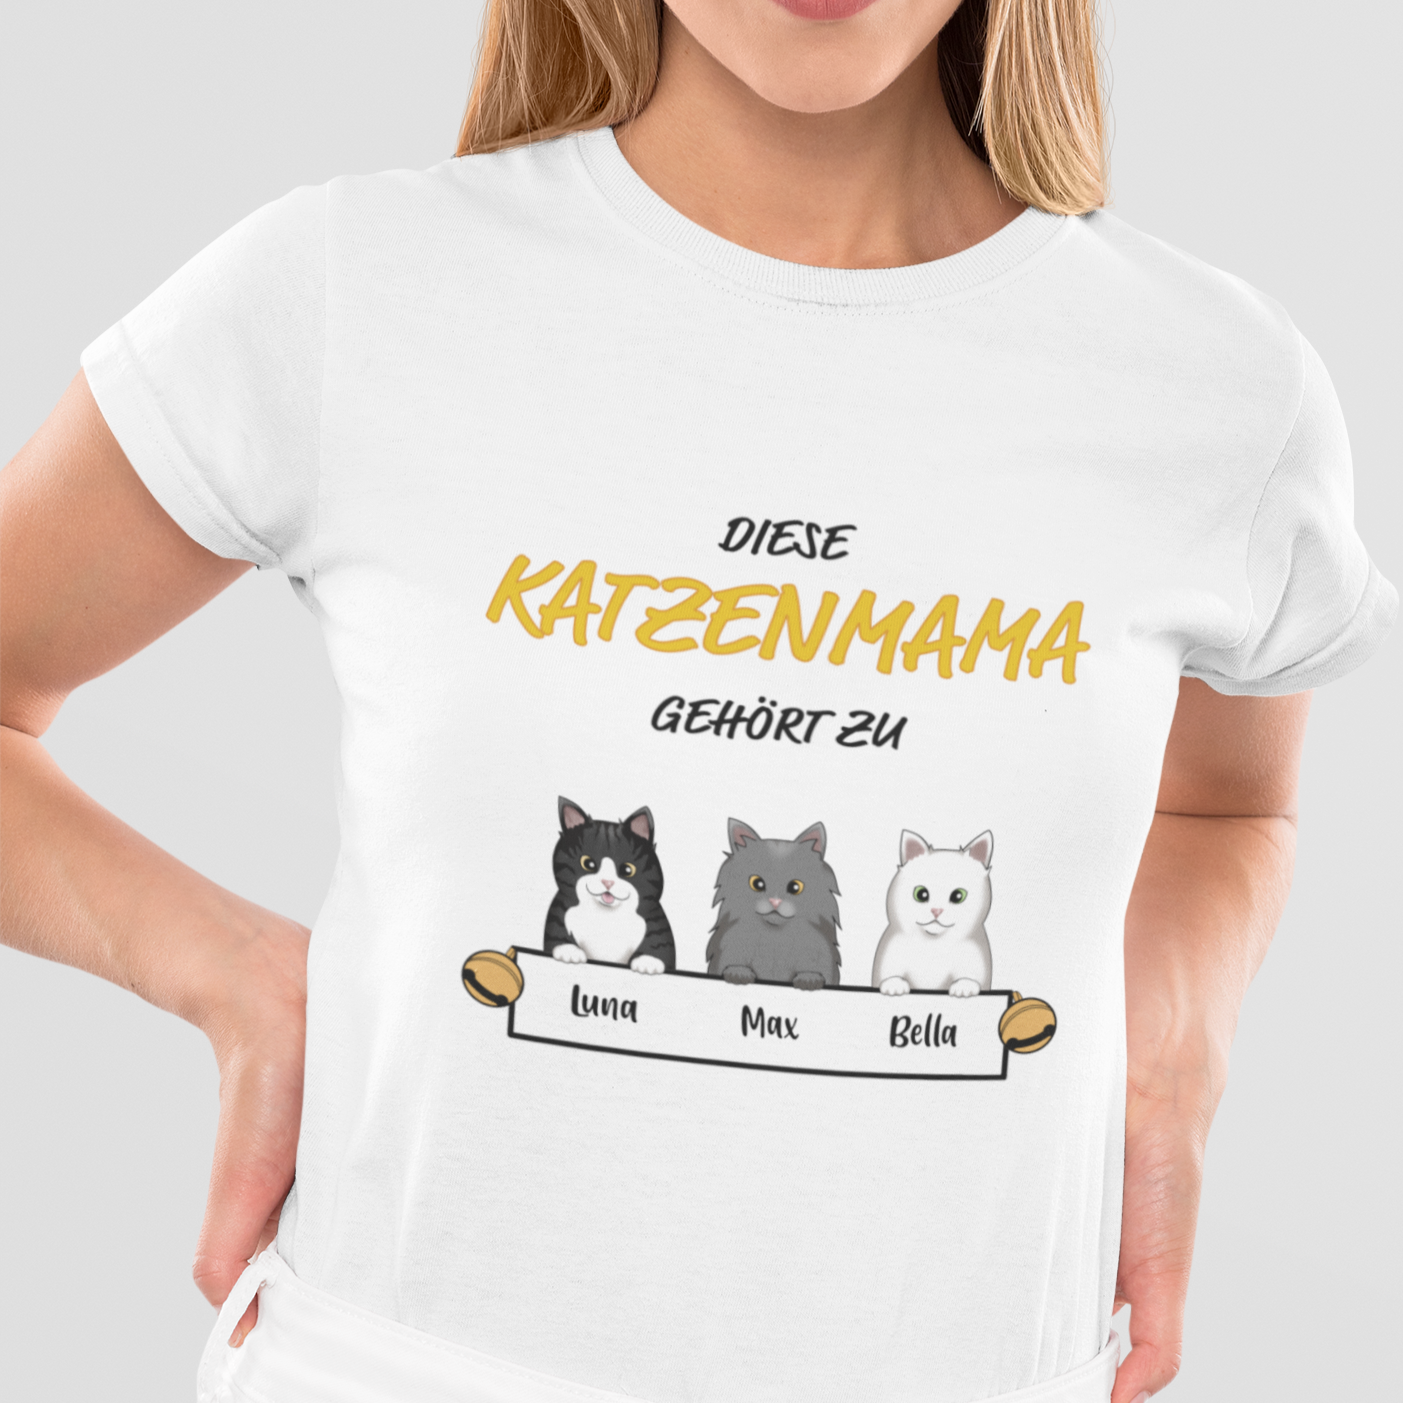 Woman wearing a Personalized Katzenmama T-Shirt with unique cat motif print.